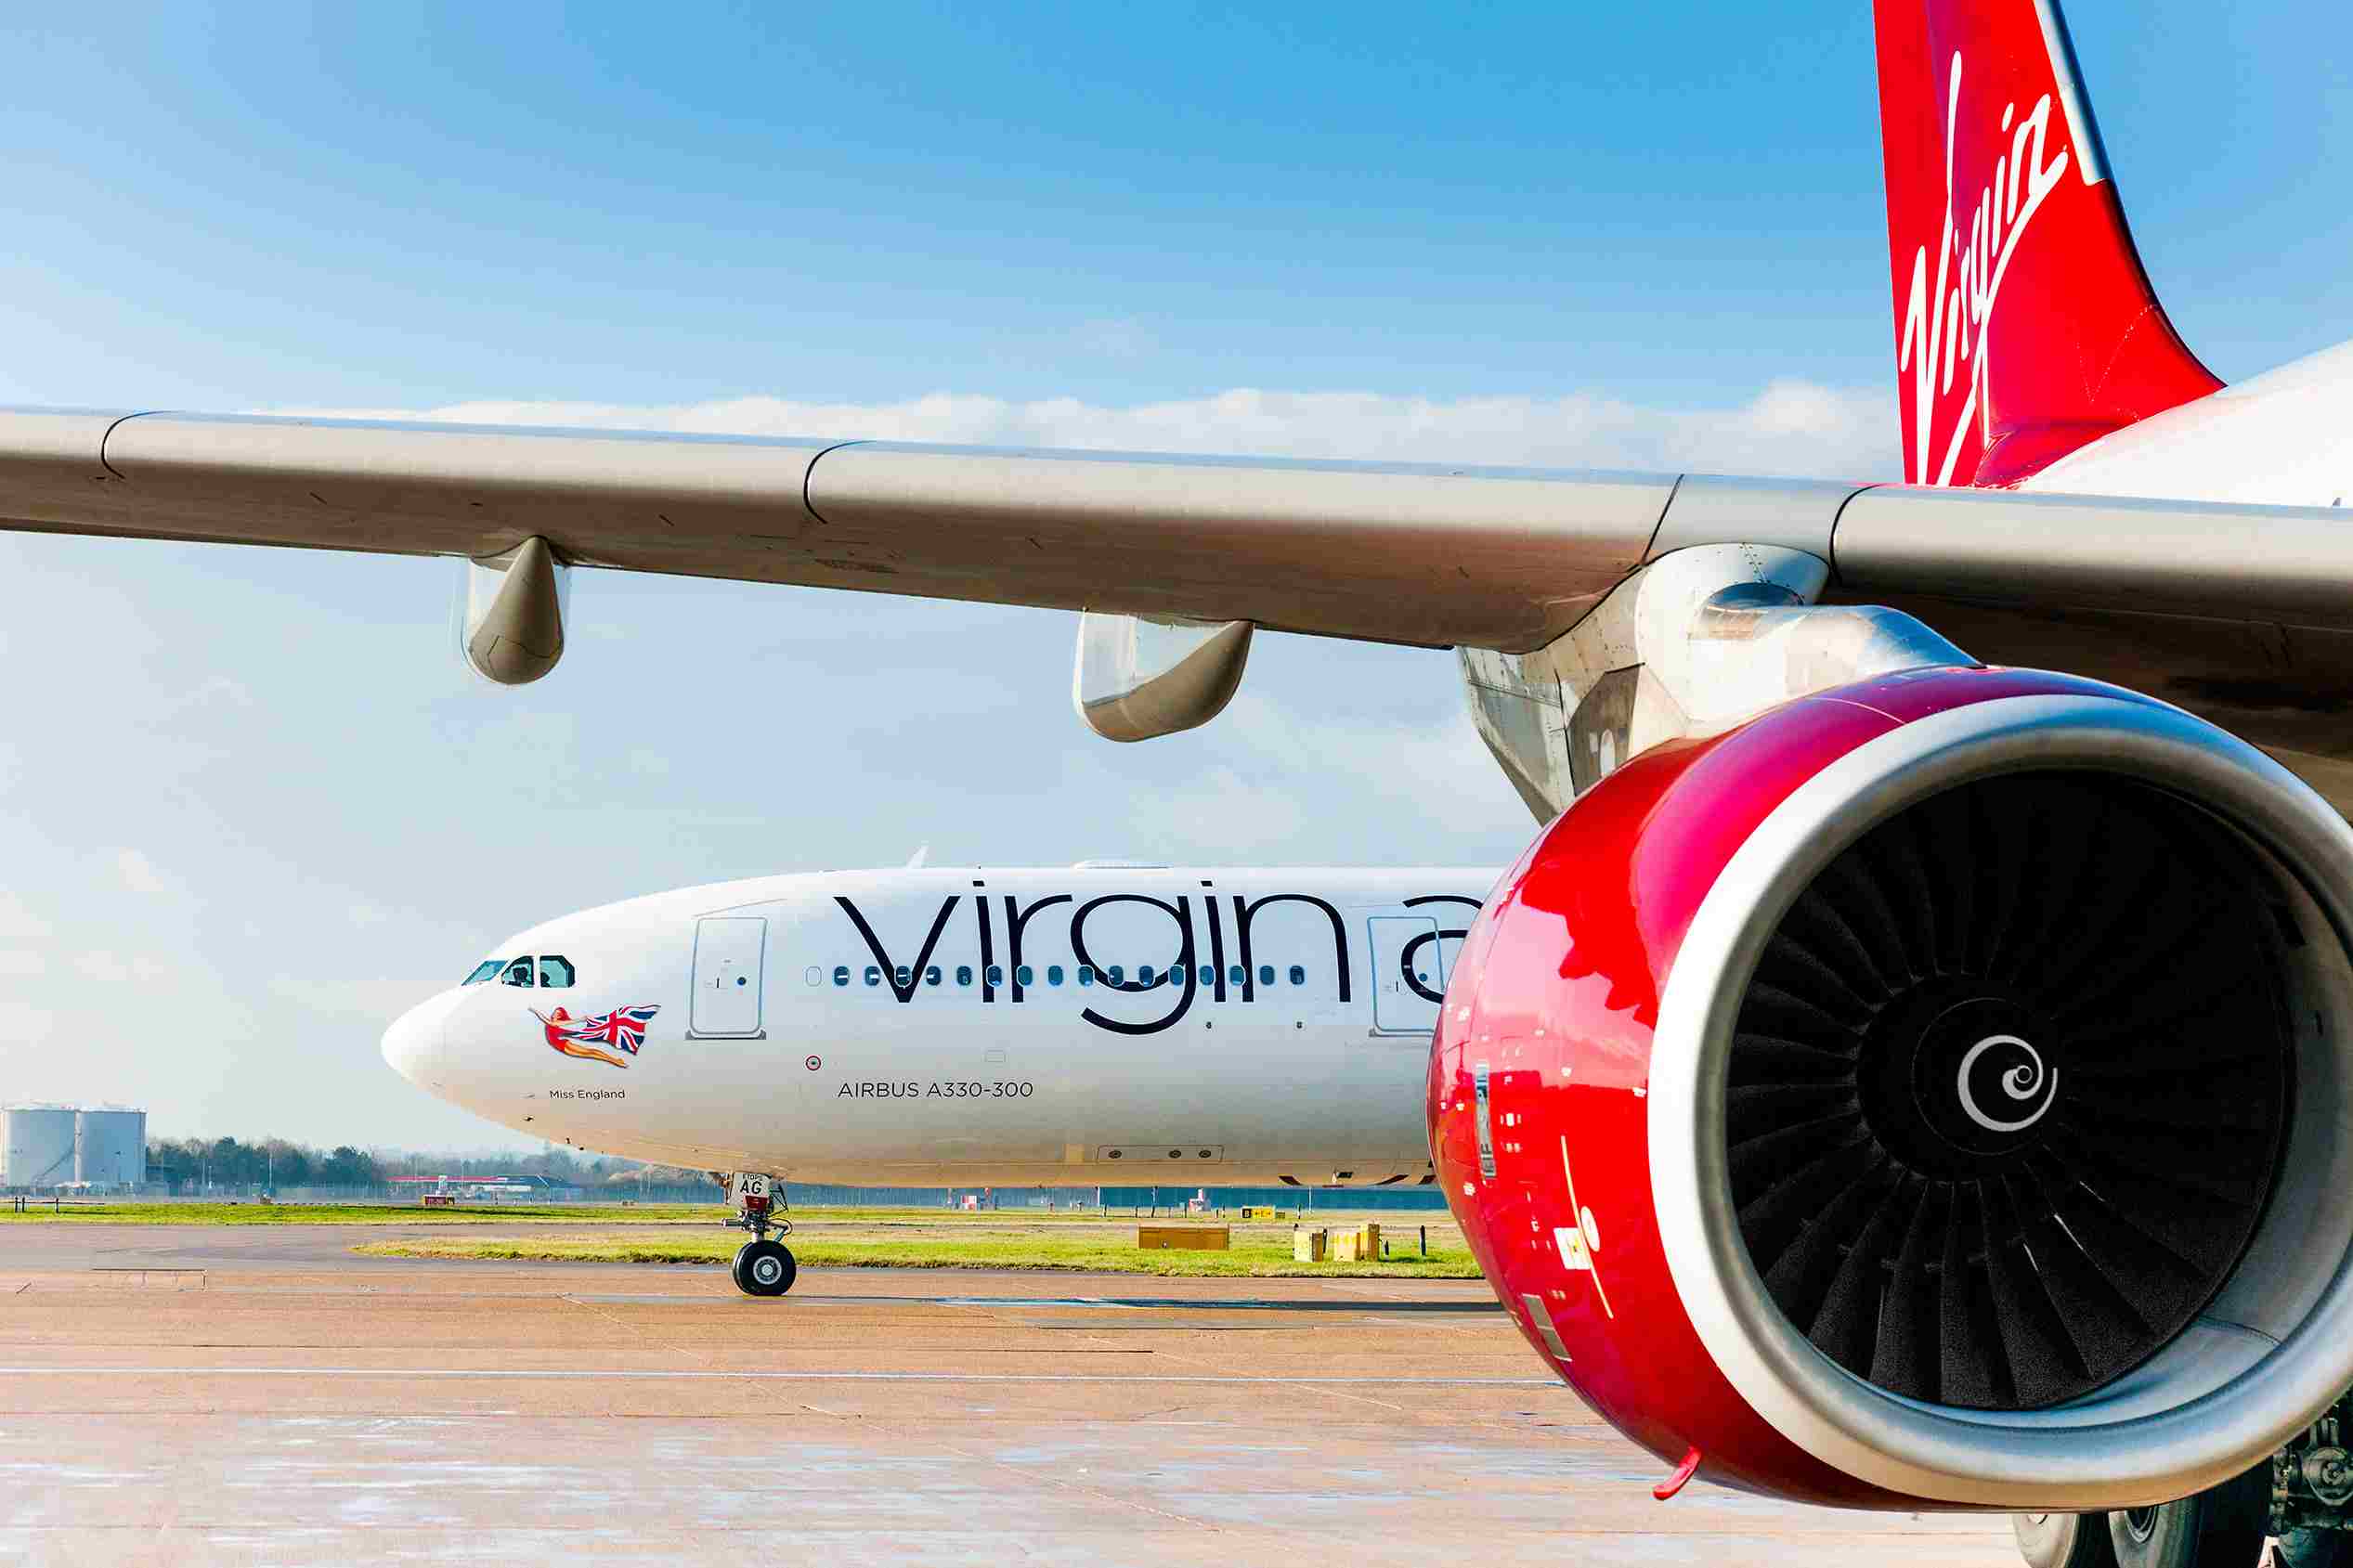 two Virgin Atlantic planes on tarmac